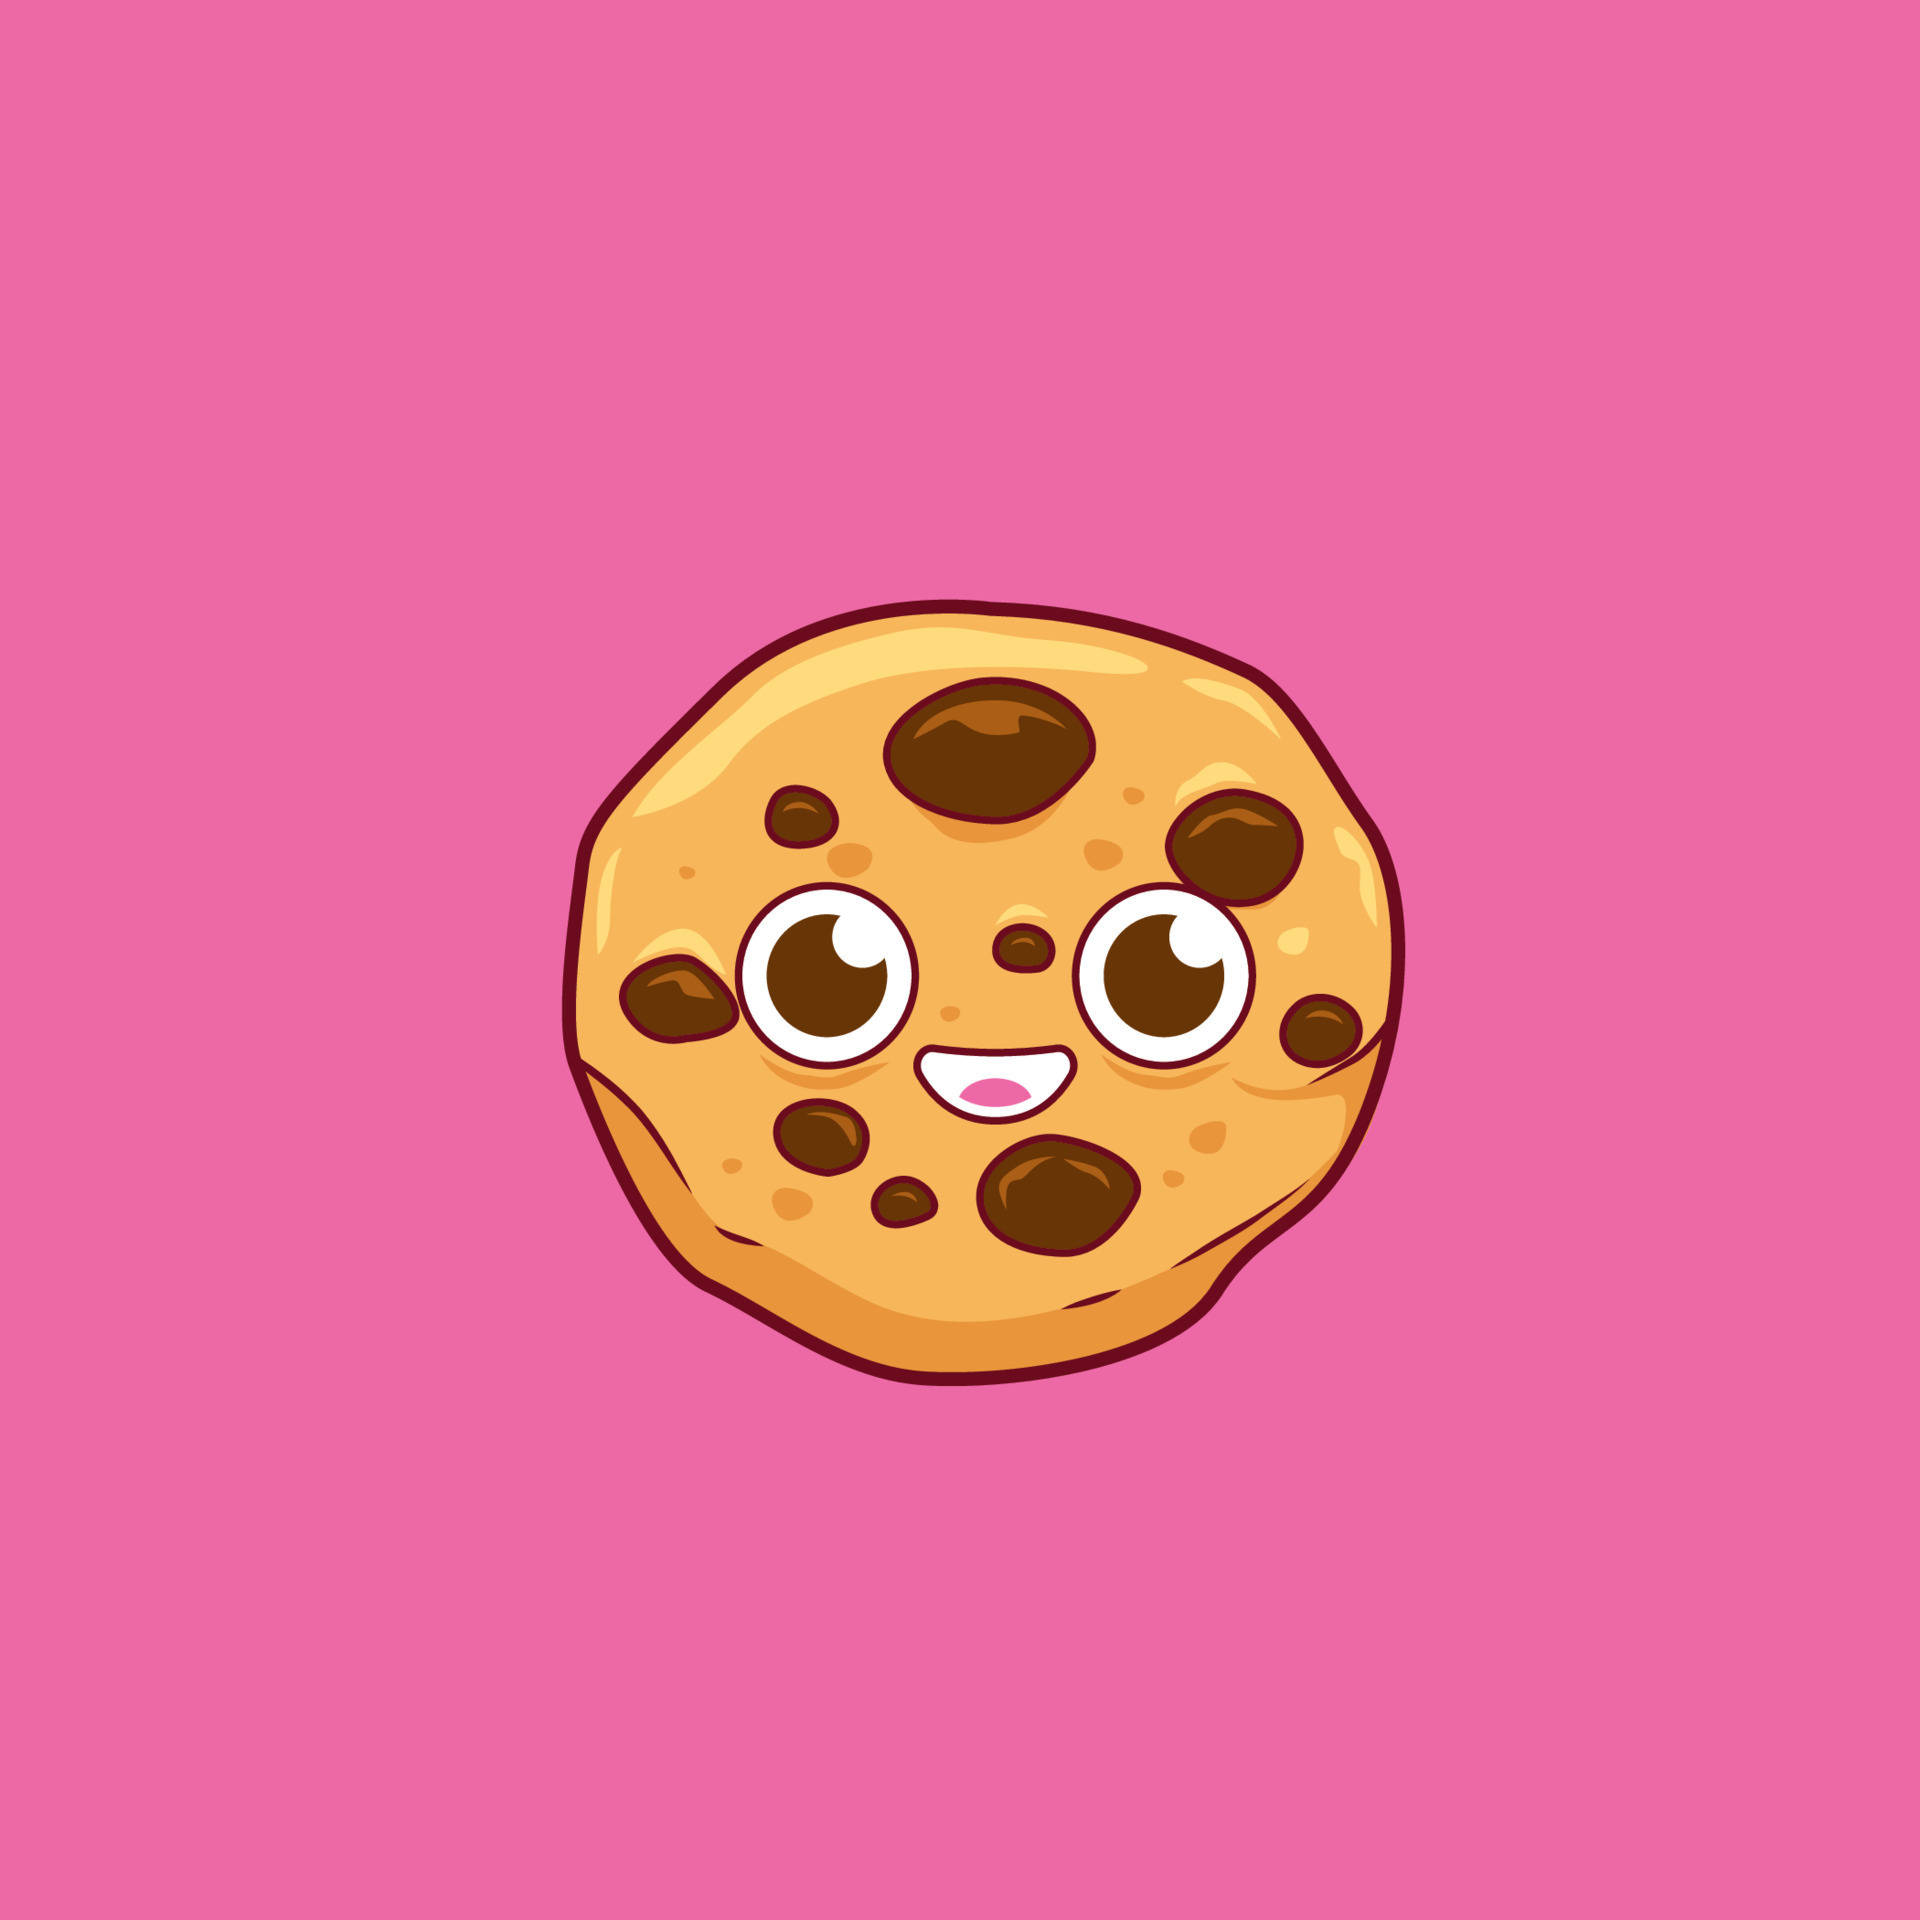 Cartoon Cookie With Goofy Eyes Wallpaper